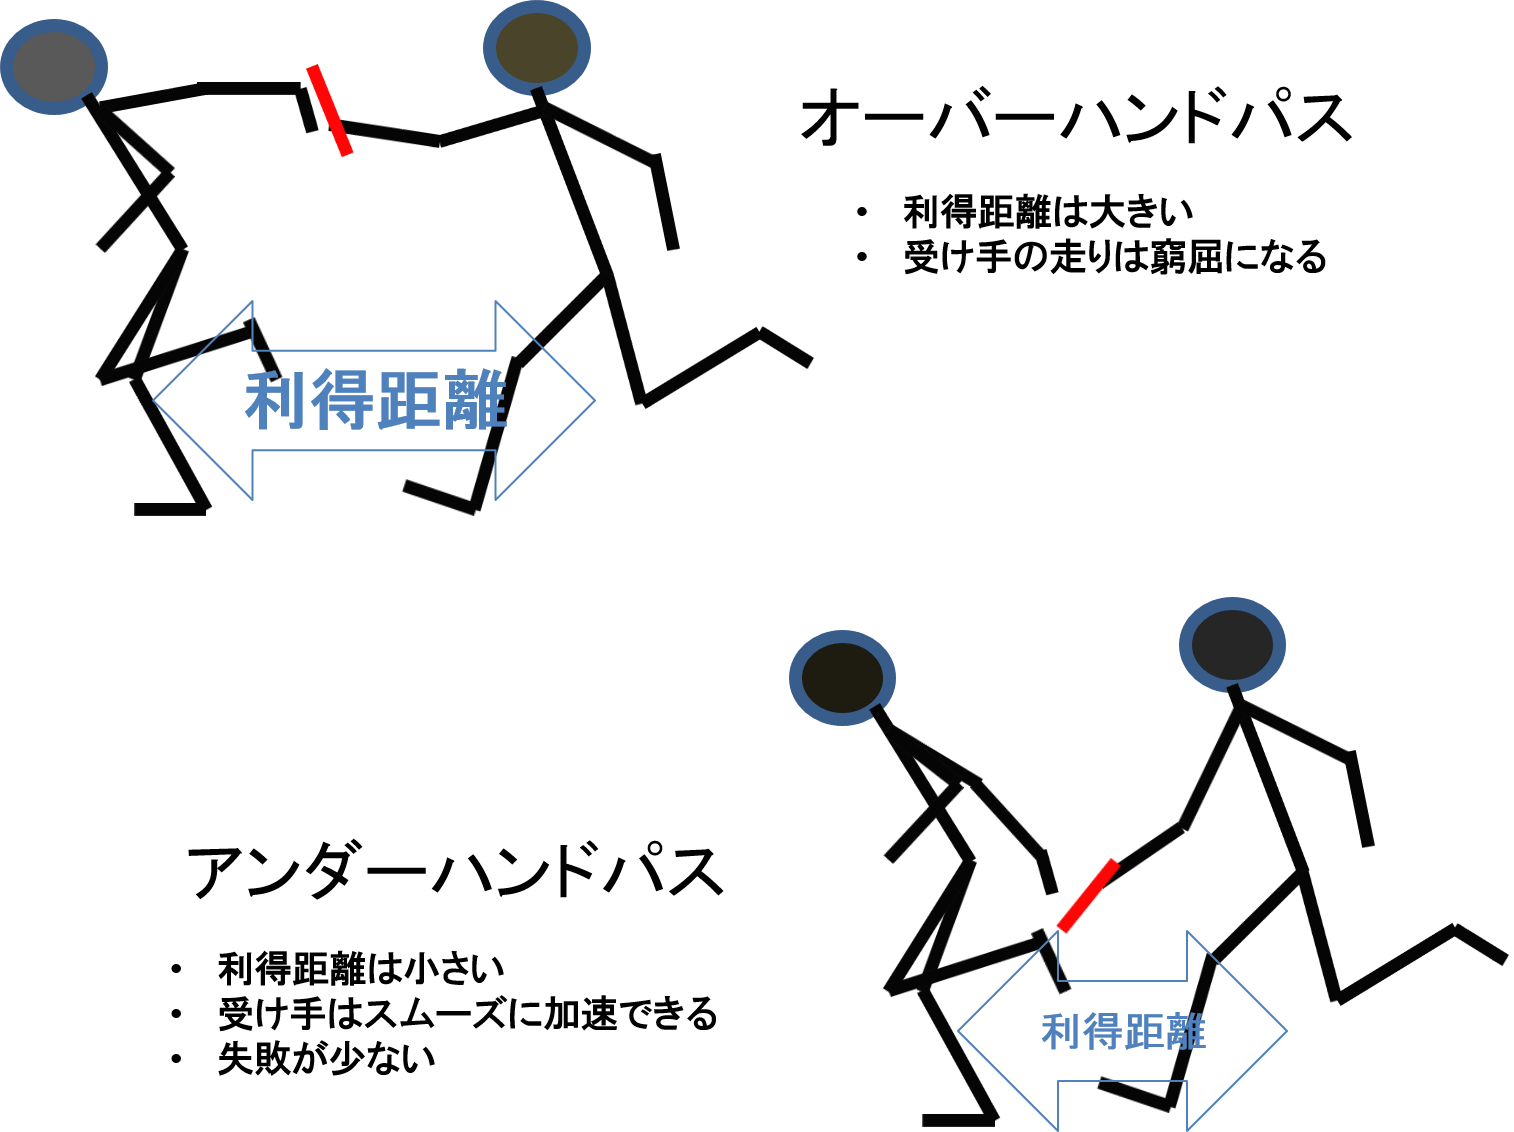 4 100mリレー 4継 のバトンパス意識と練習方法 陸上競技の理論と実践 Sprint Conditioning